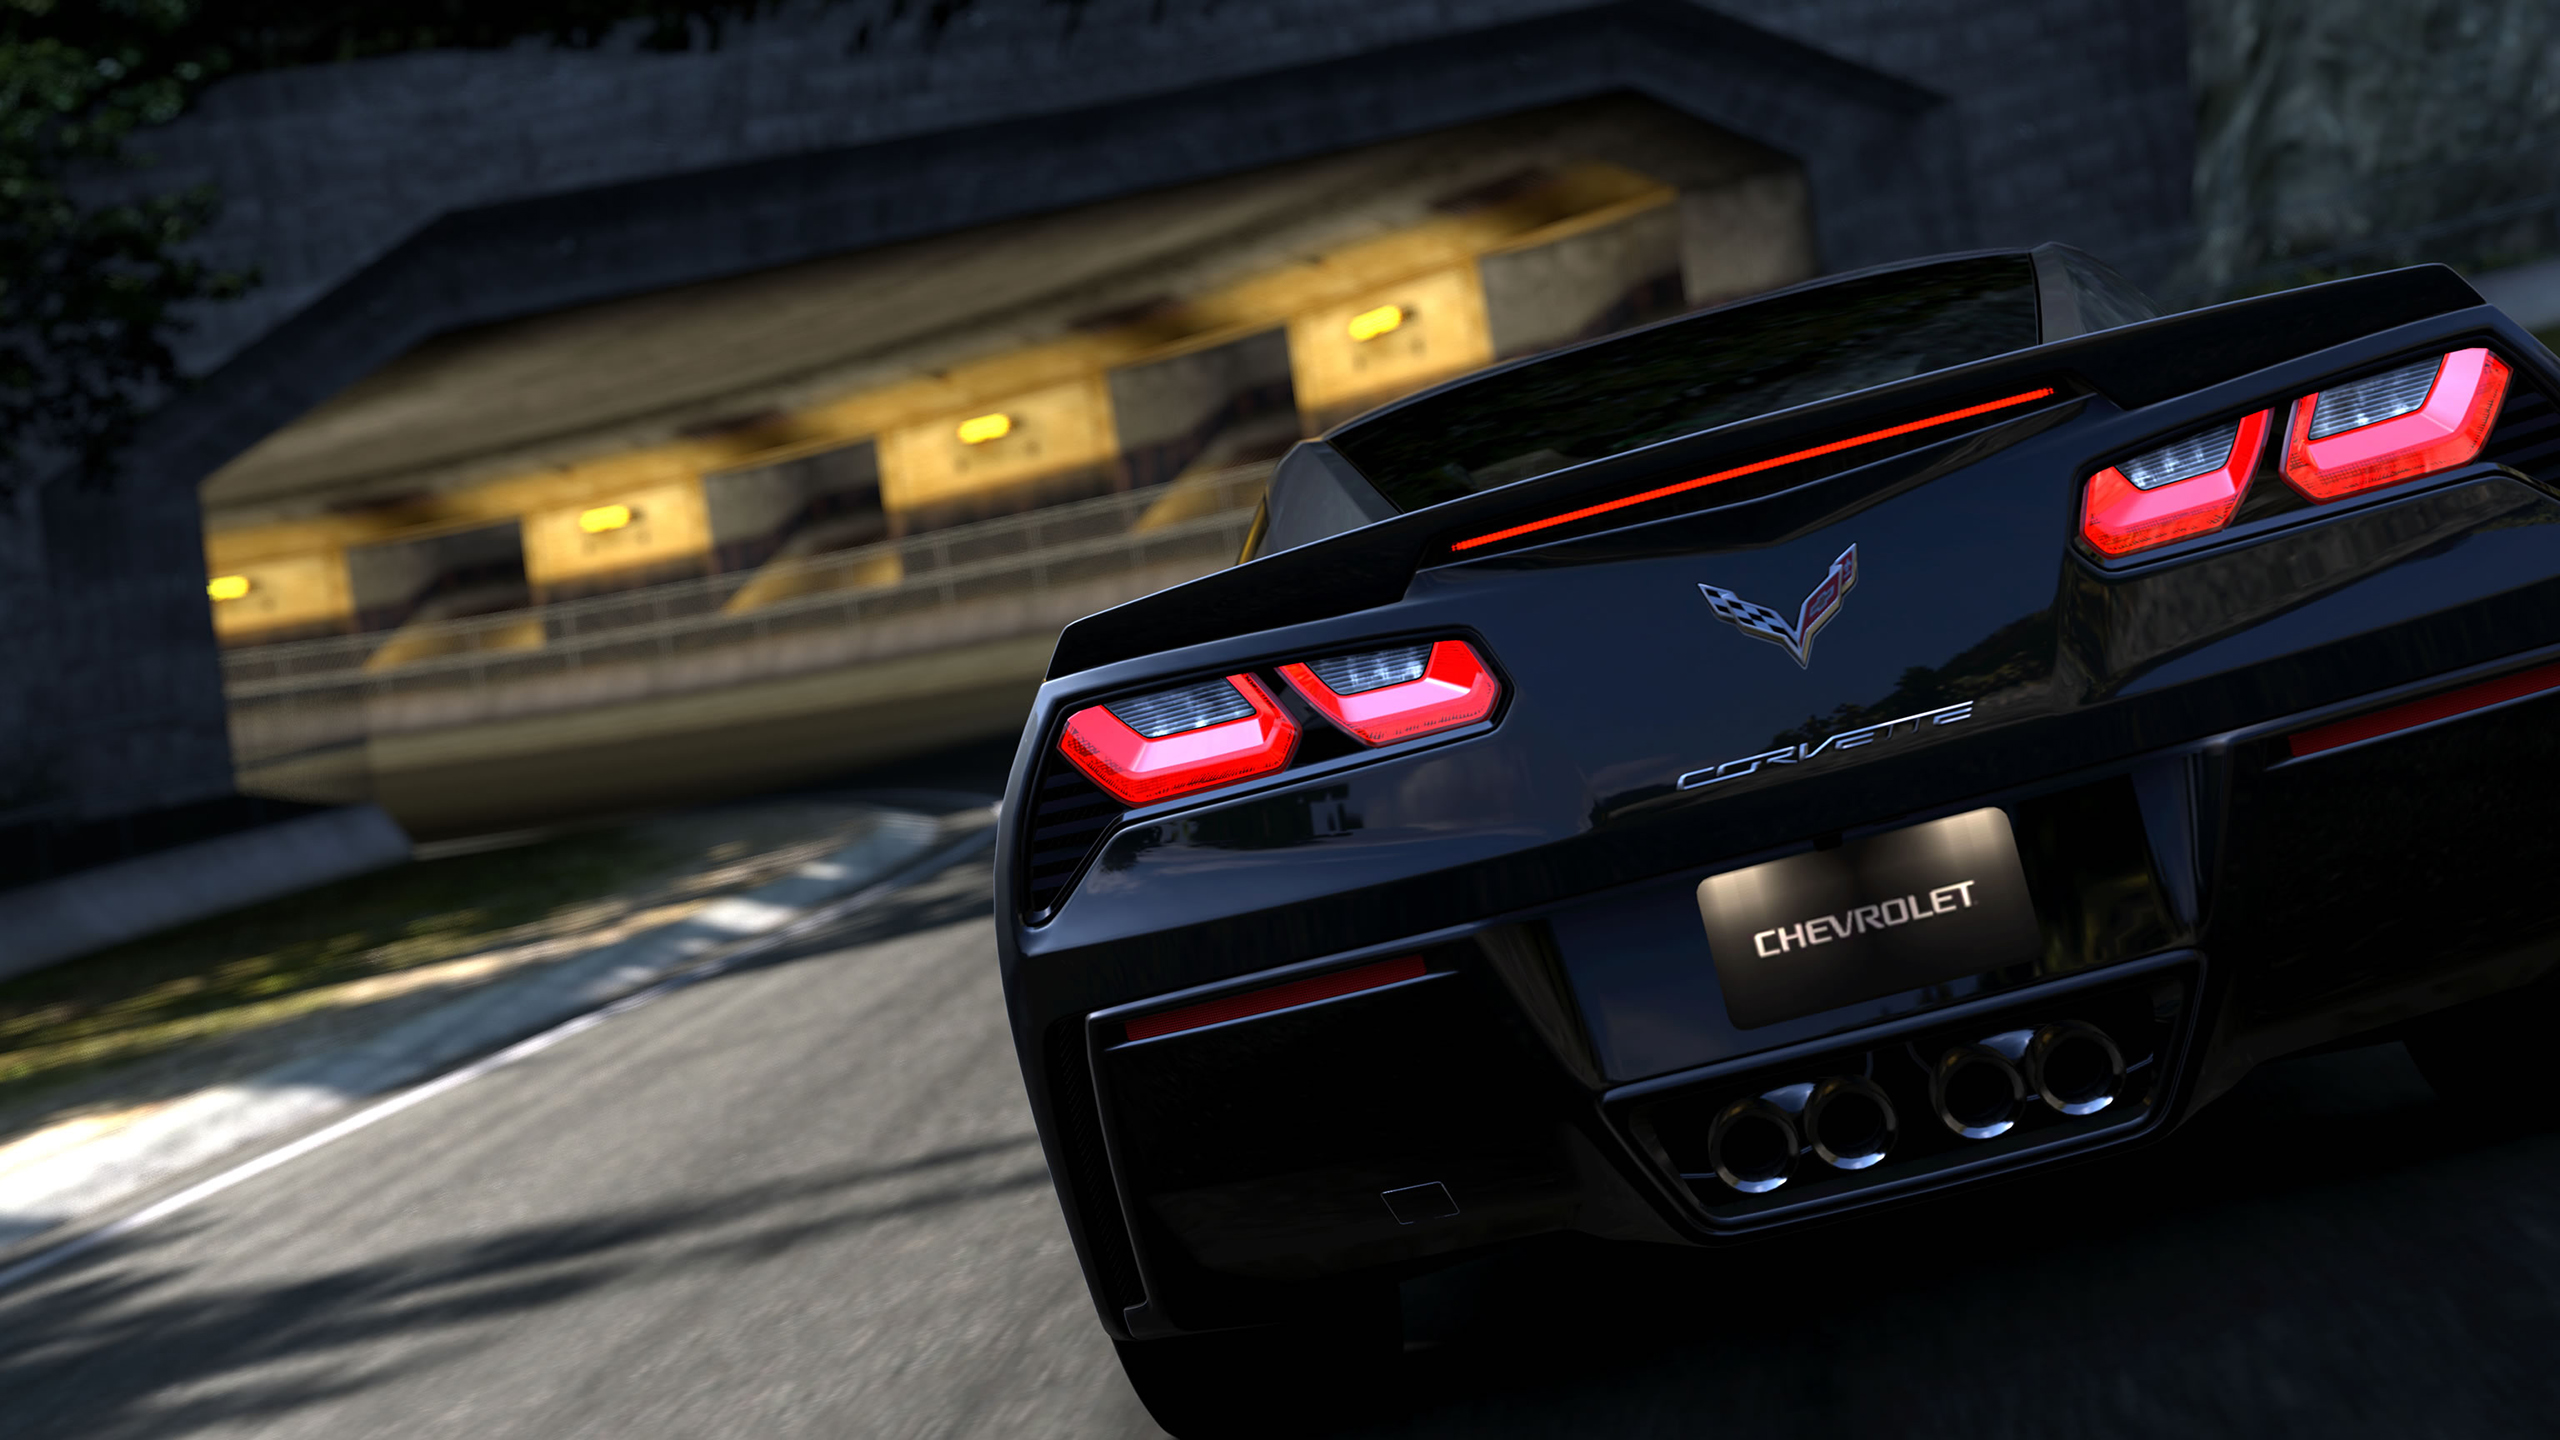 General 2560x1440 Chevrolet Corvette C7 car vehicle rear view black cars Gran Turismo Chevrolet American cars video games